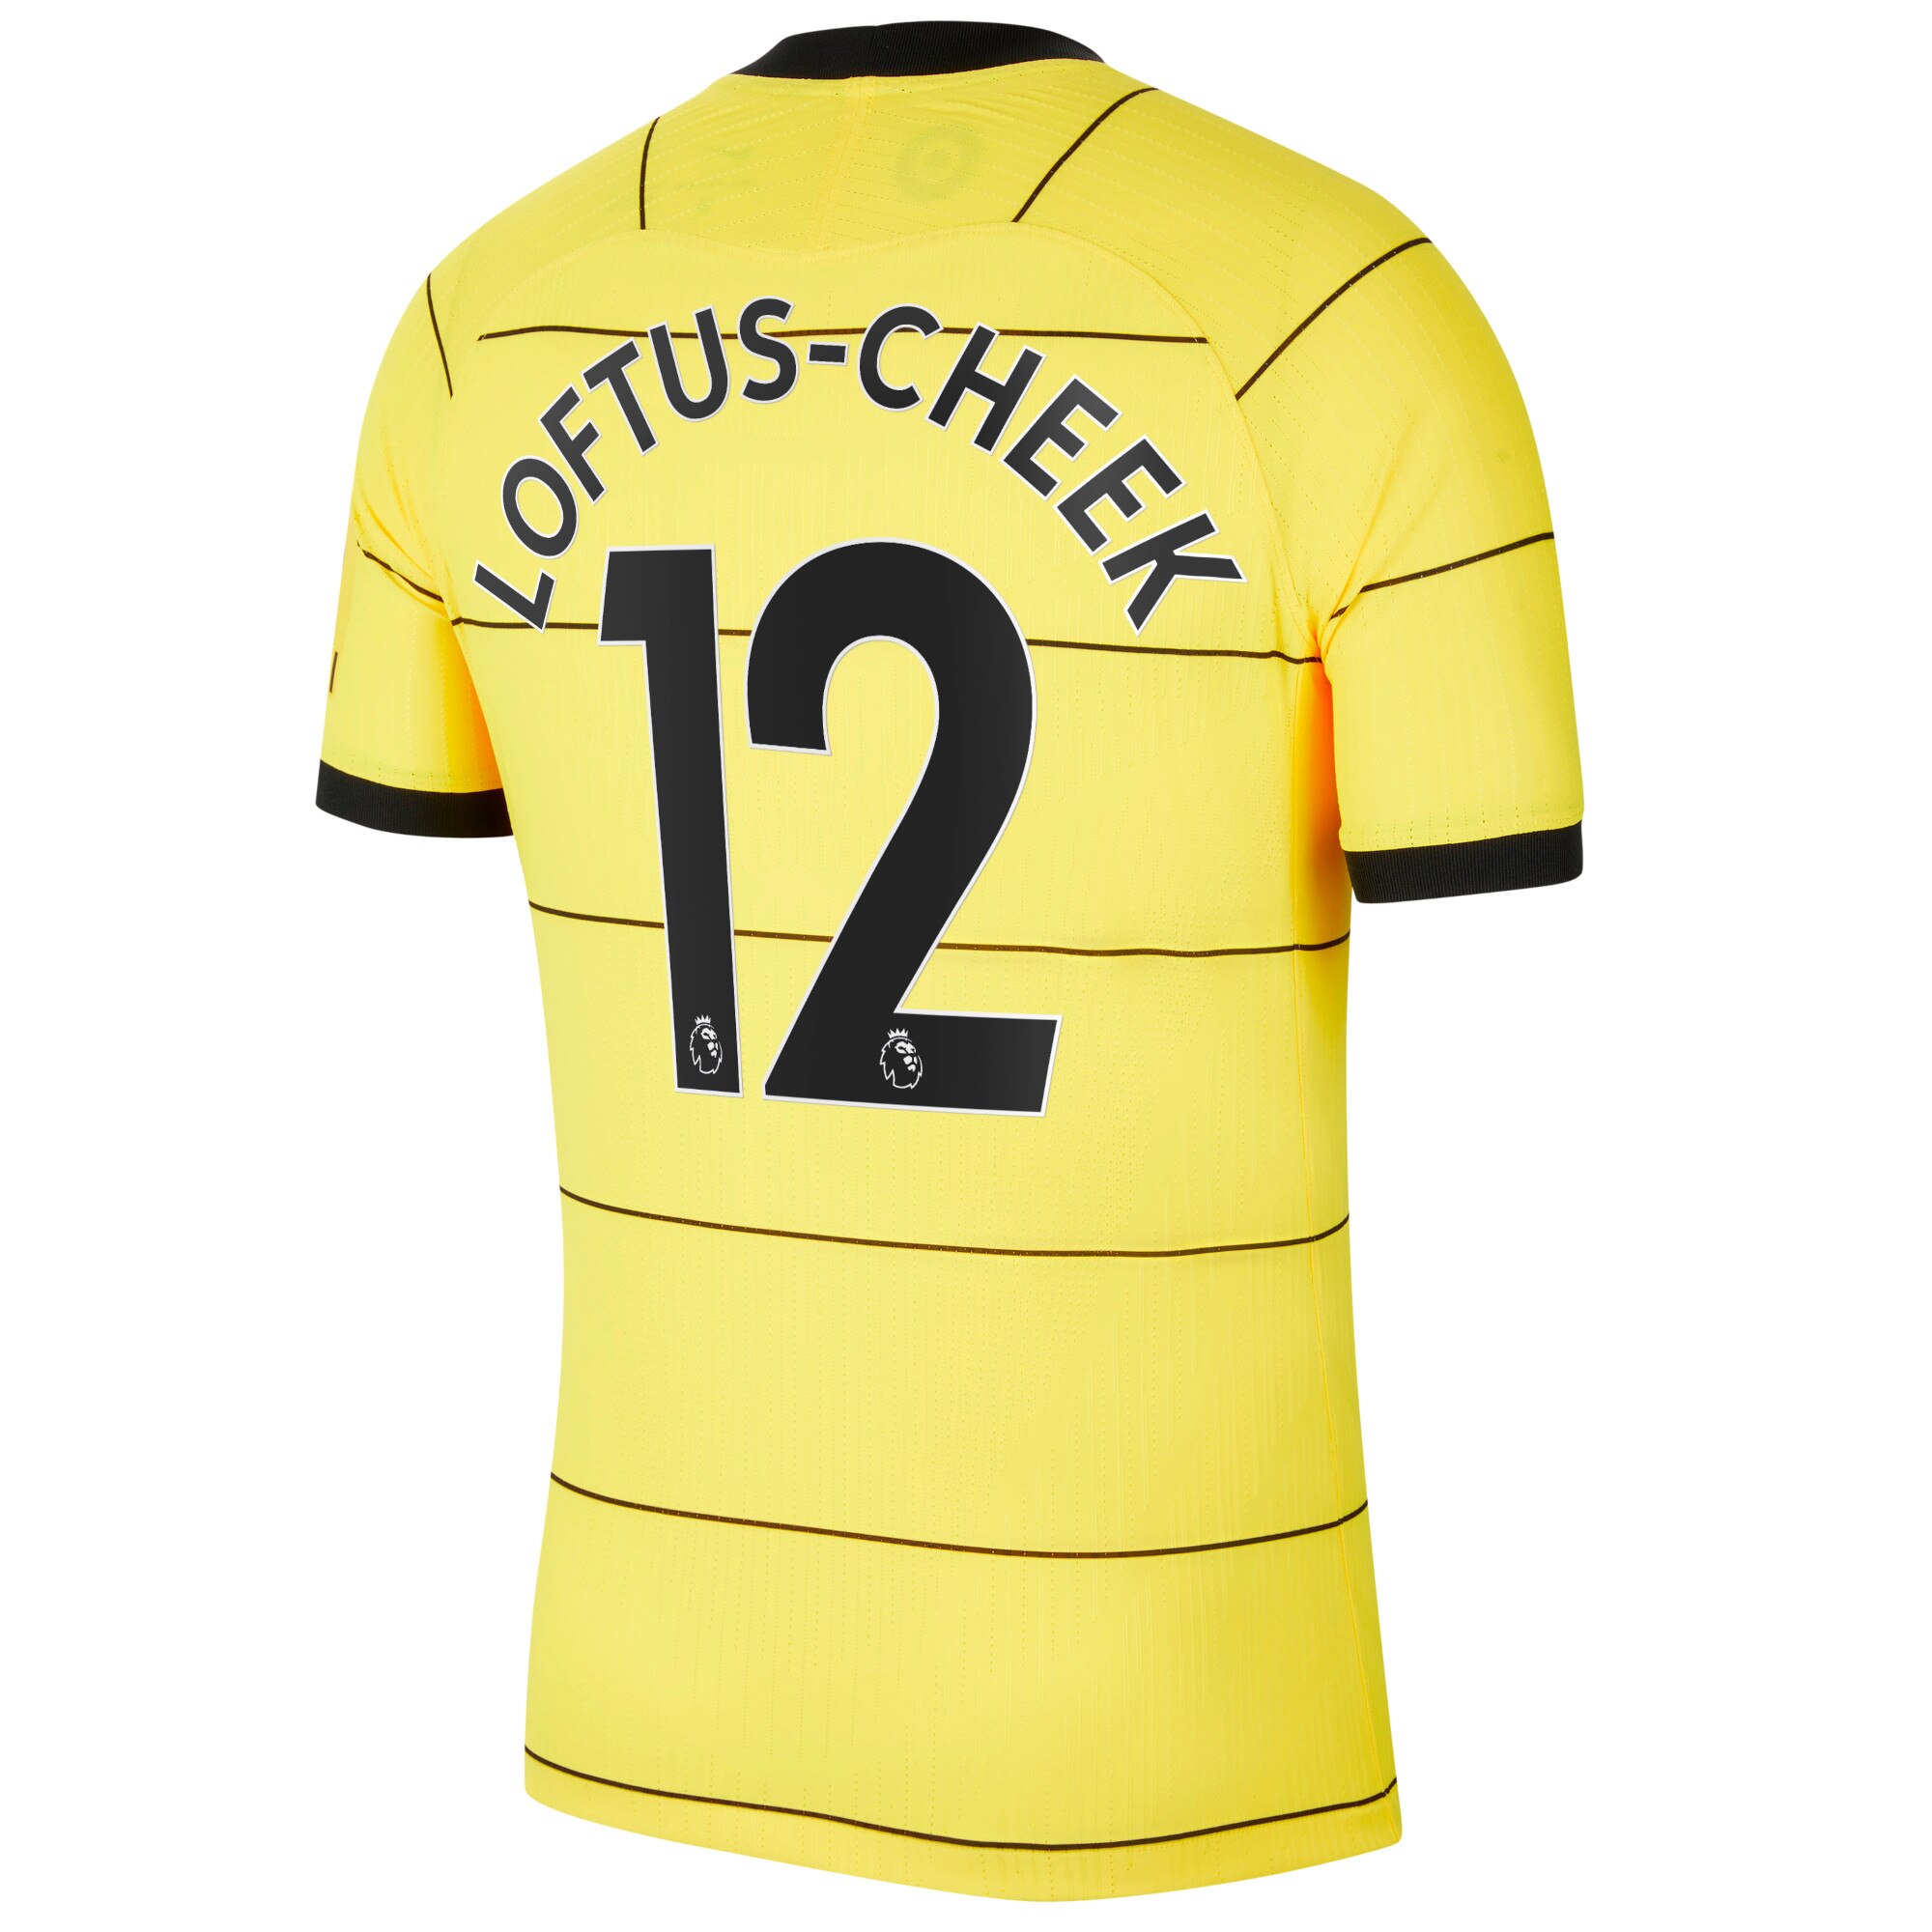 Chelsea Away Vapor Match Shirt 2021-22 with Loftus-Cheek 12 printing